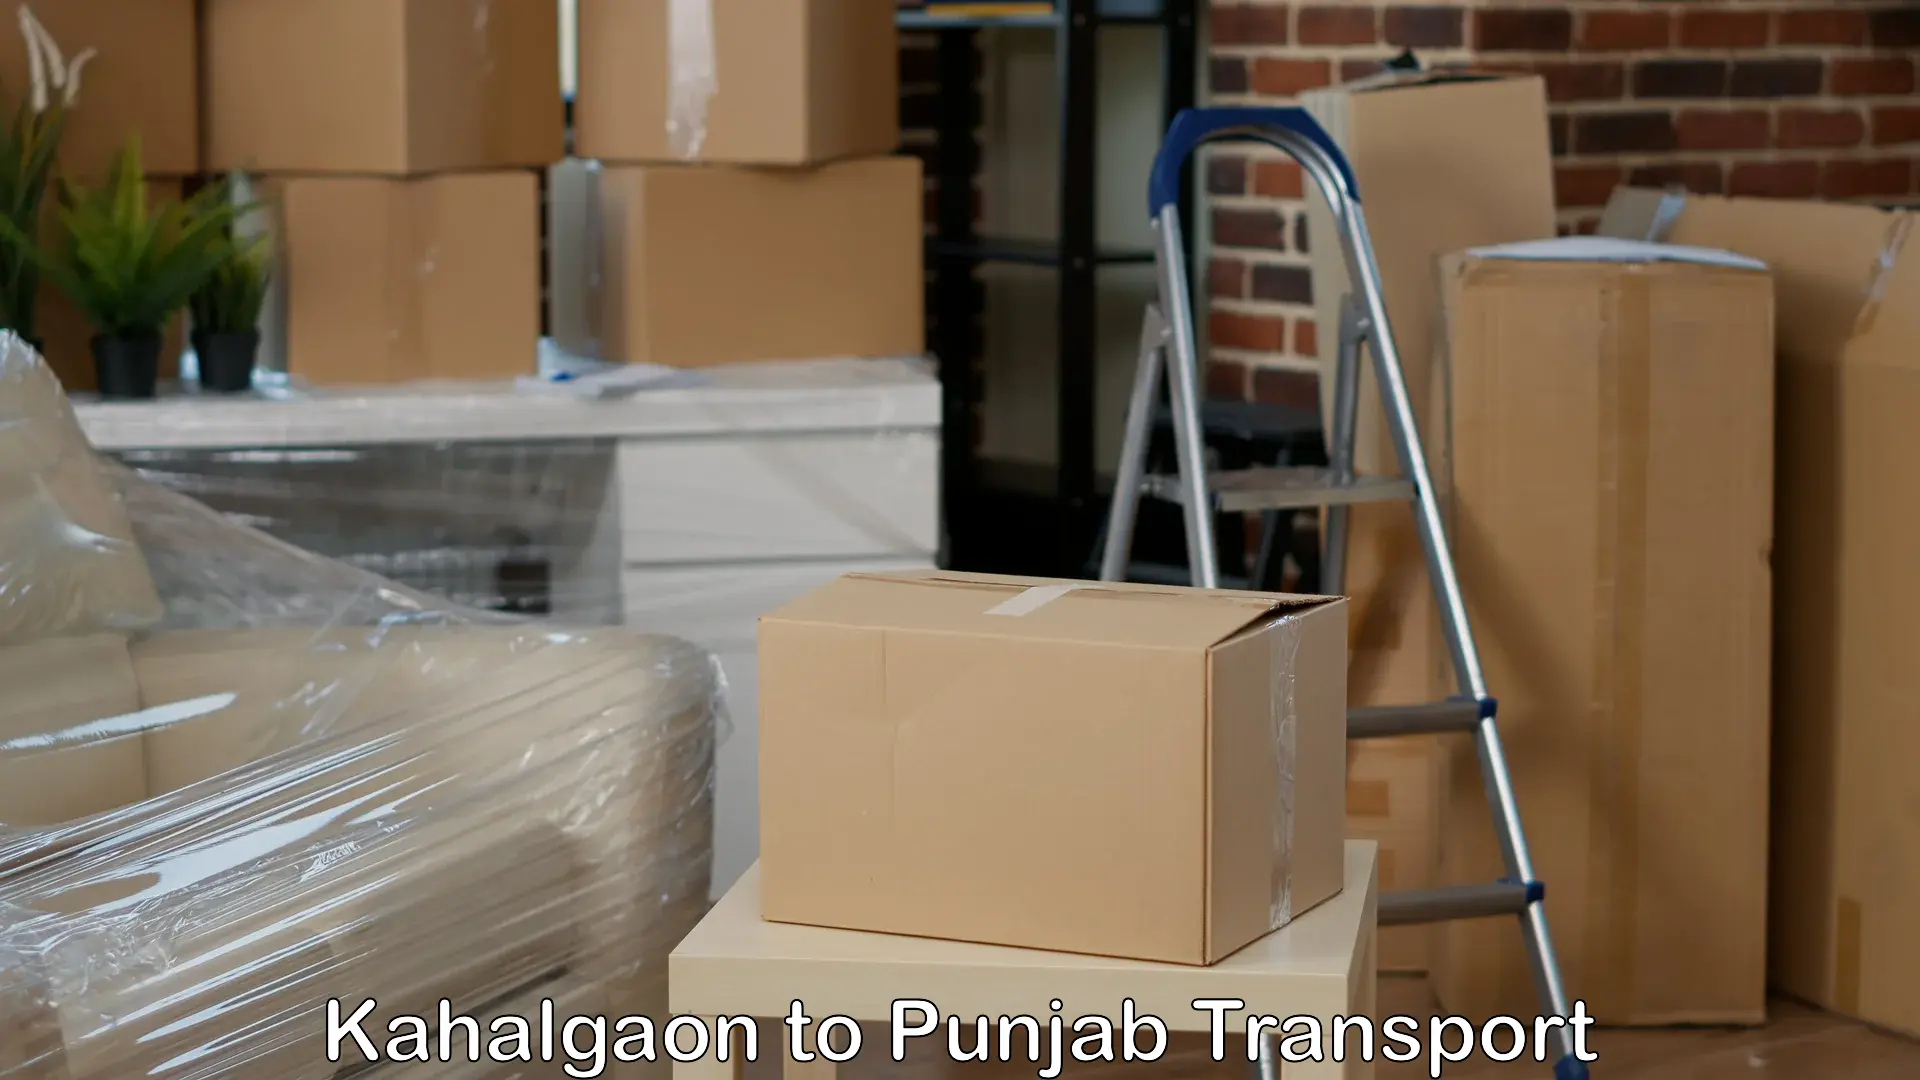 Shipping partner Kahalgaon to Dera Bassi